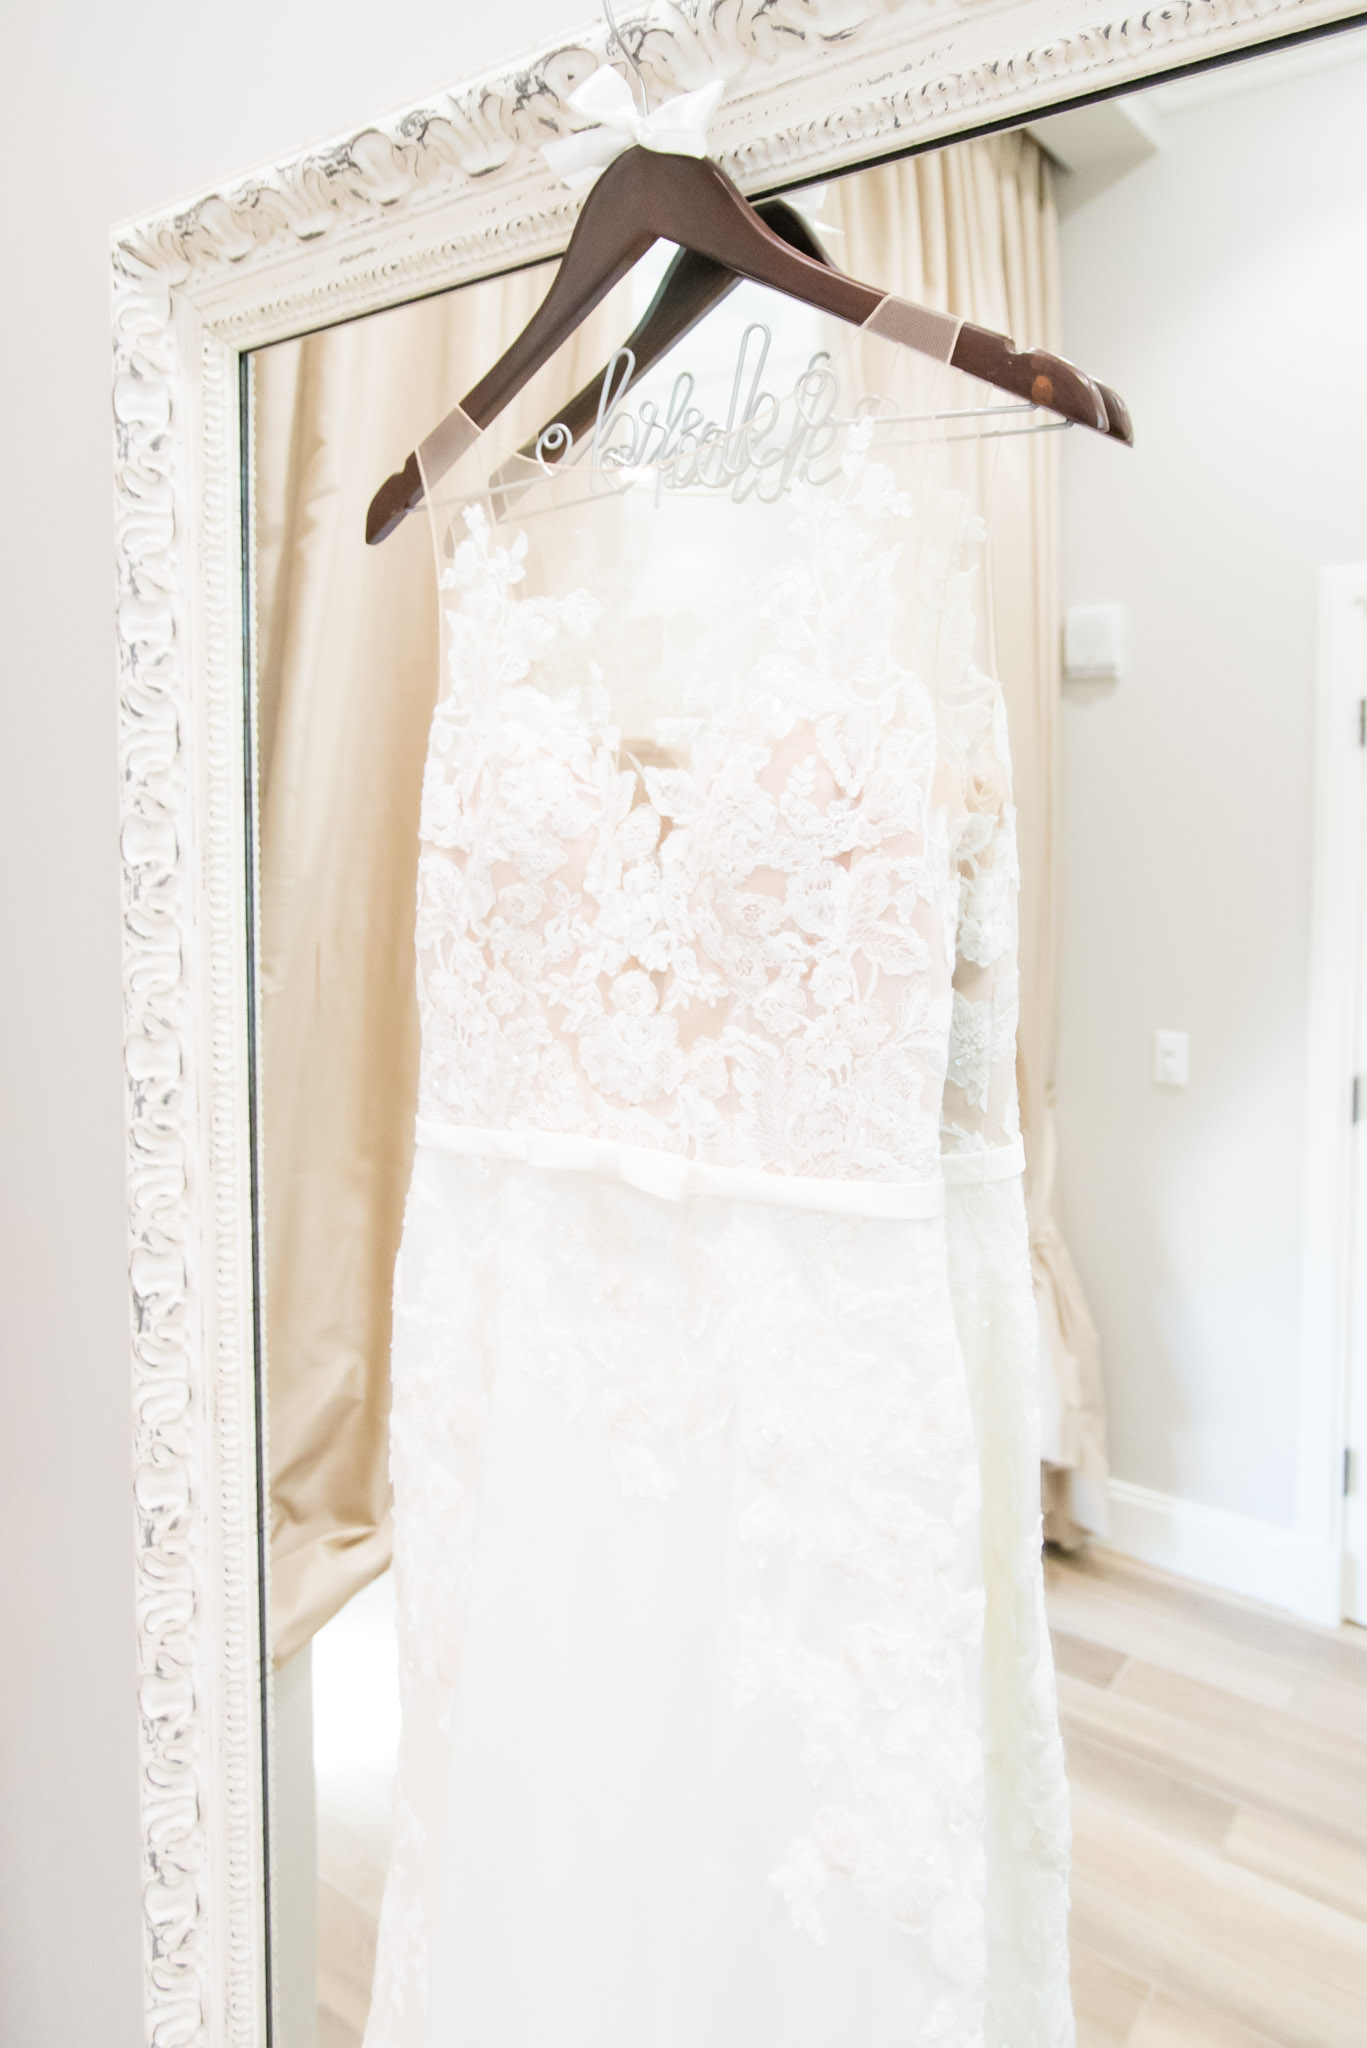 Brides dress hangs on mirror.